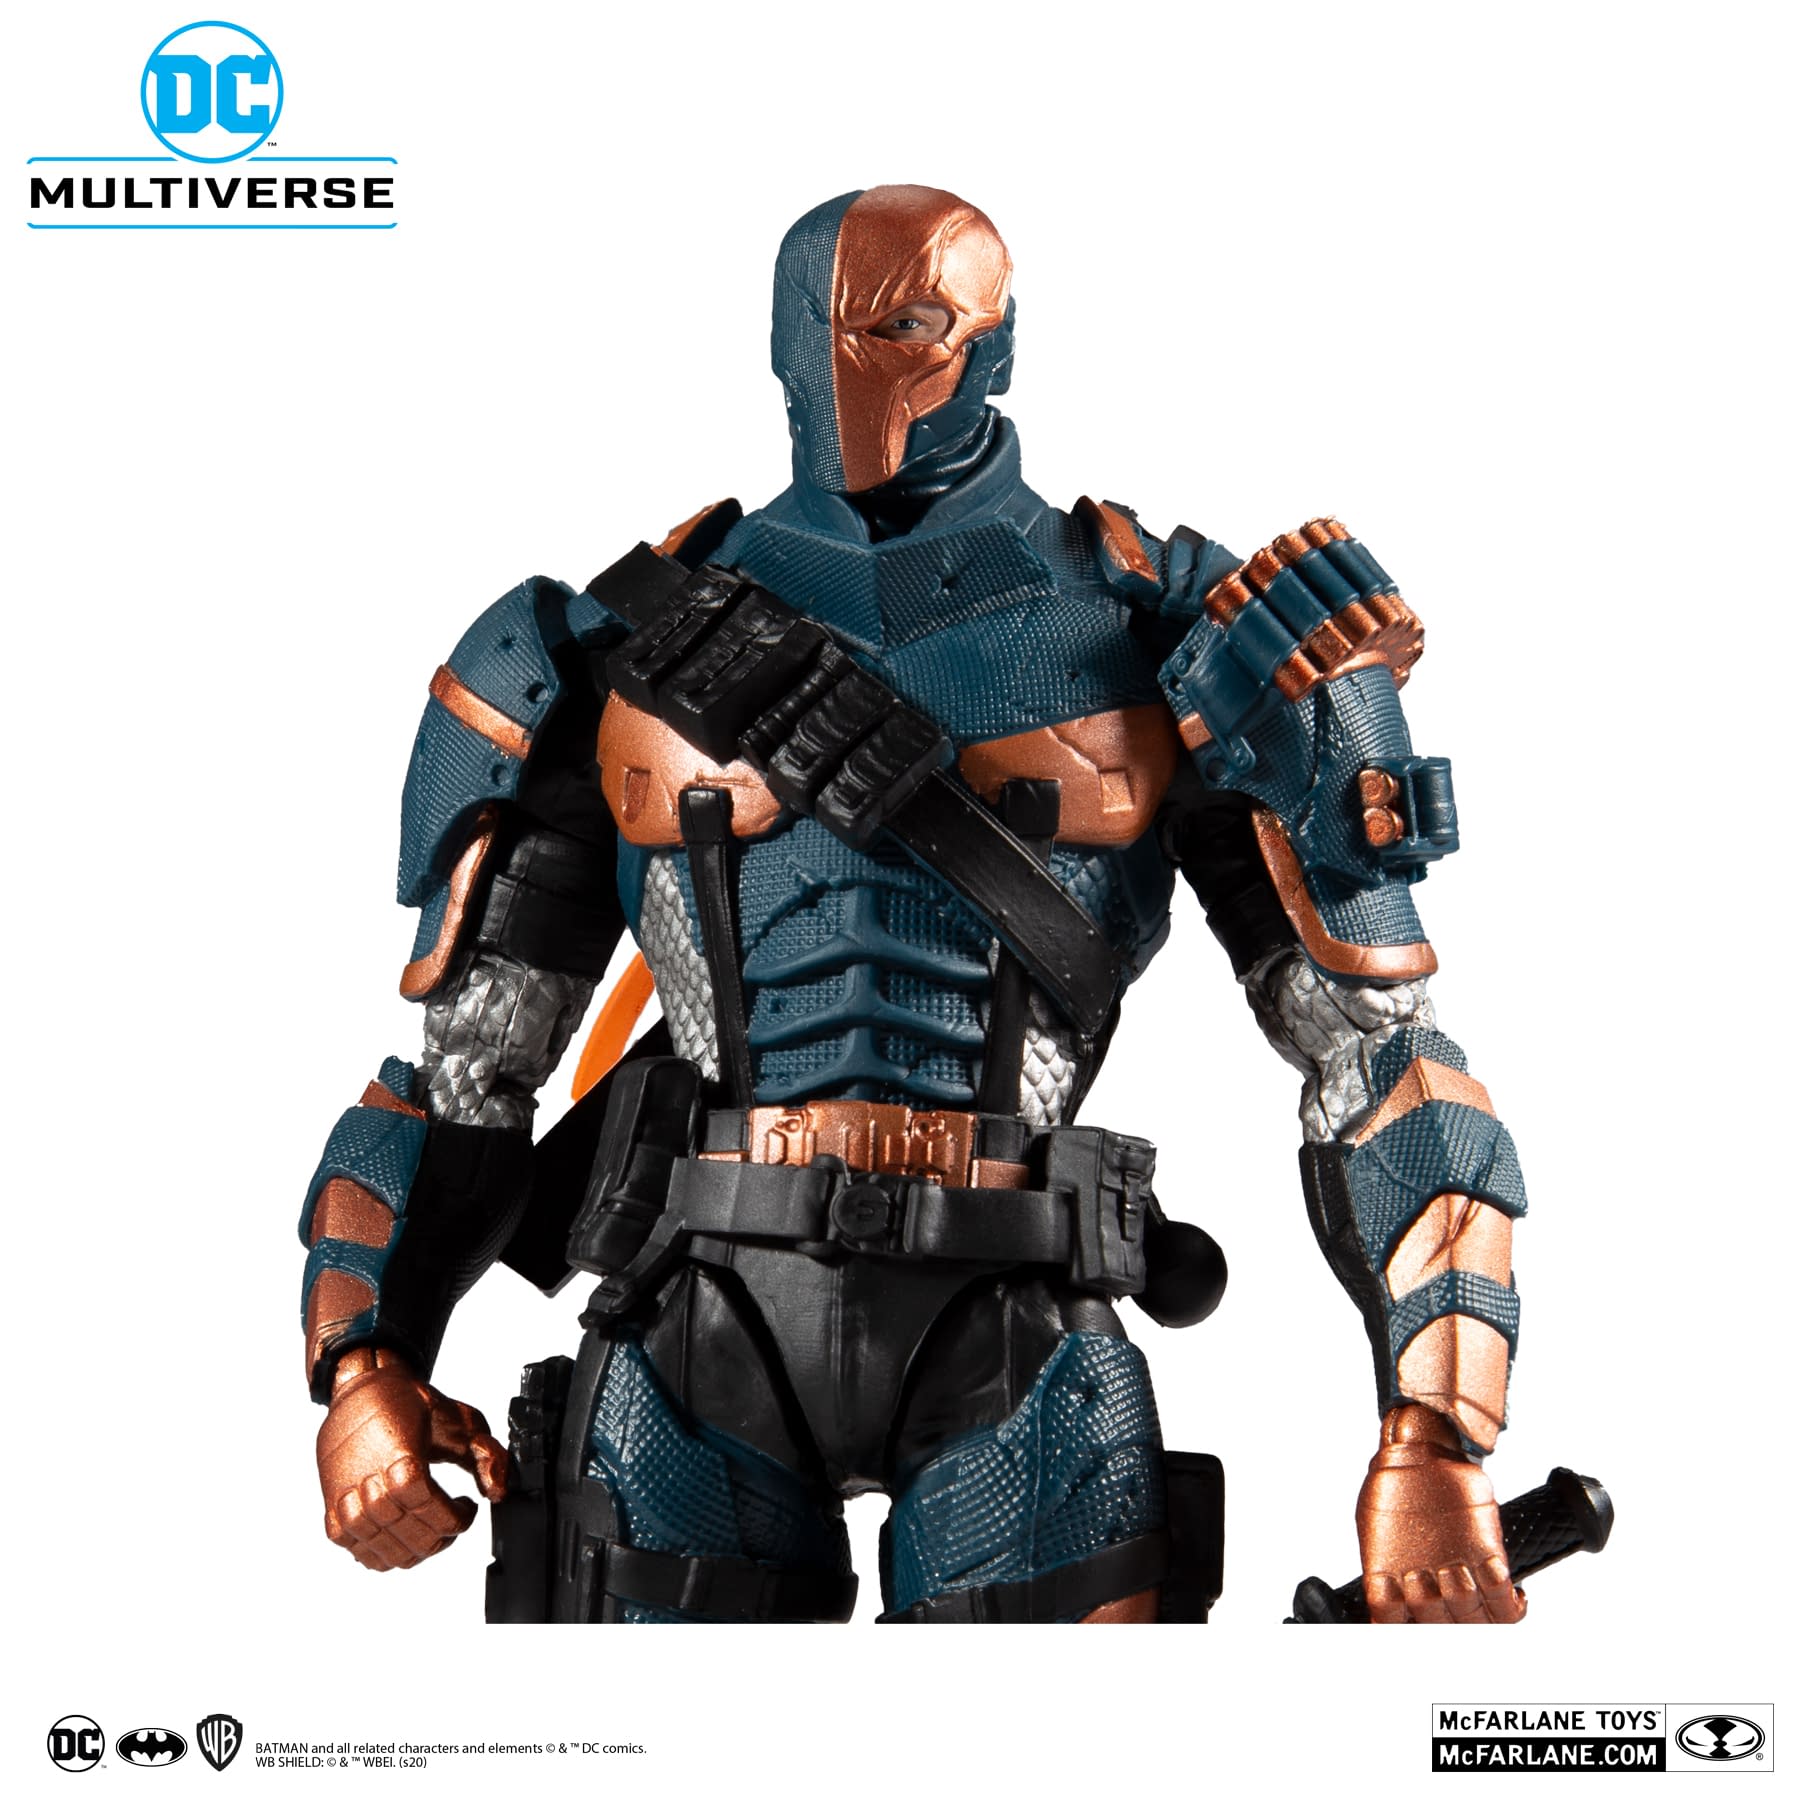 McFarlane Toys DC Multiverse Cyborg and Arkham Origins Get Glams